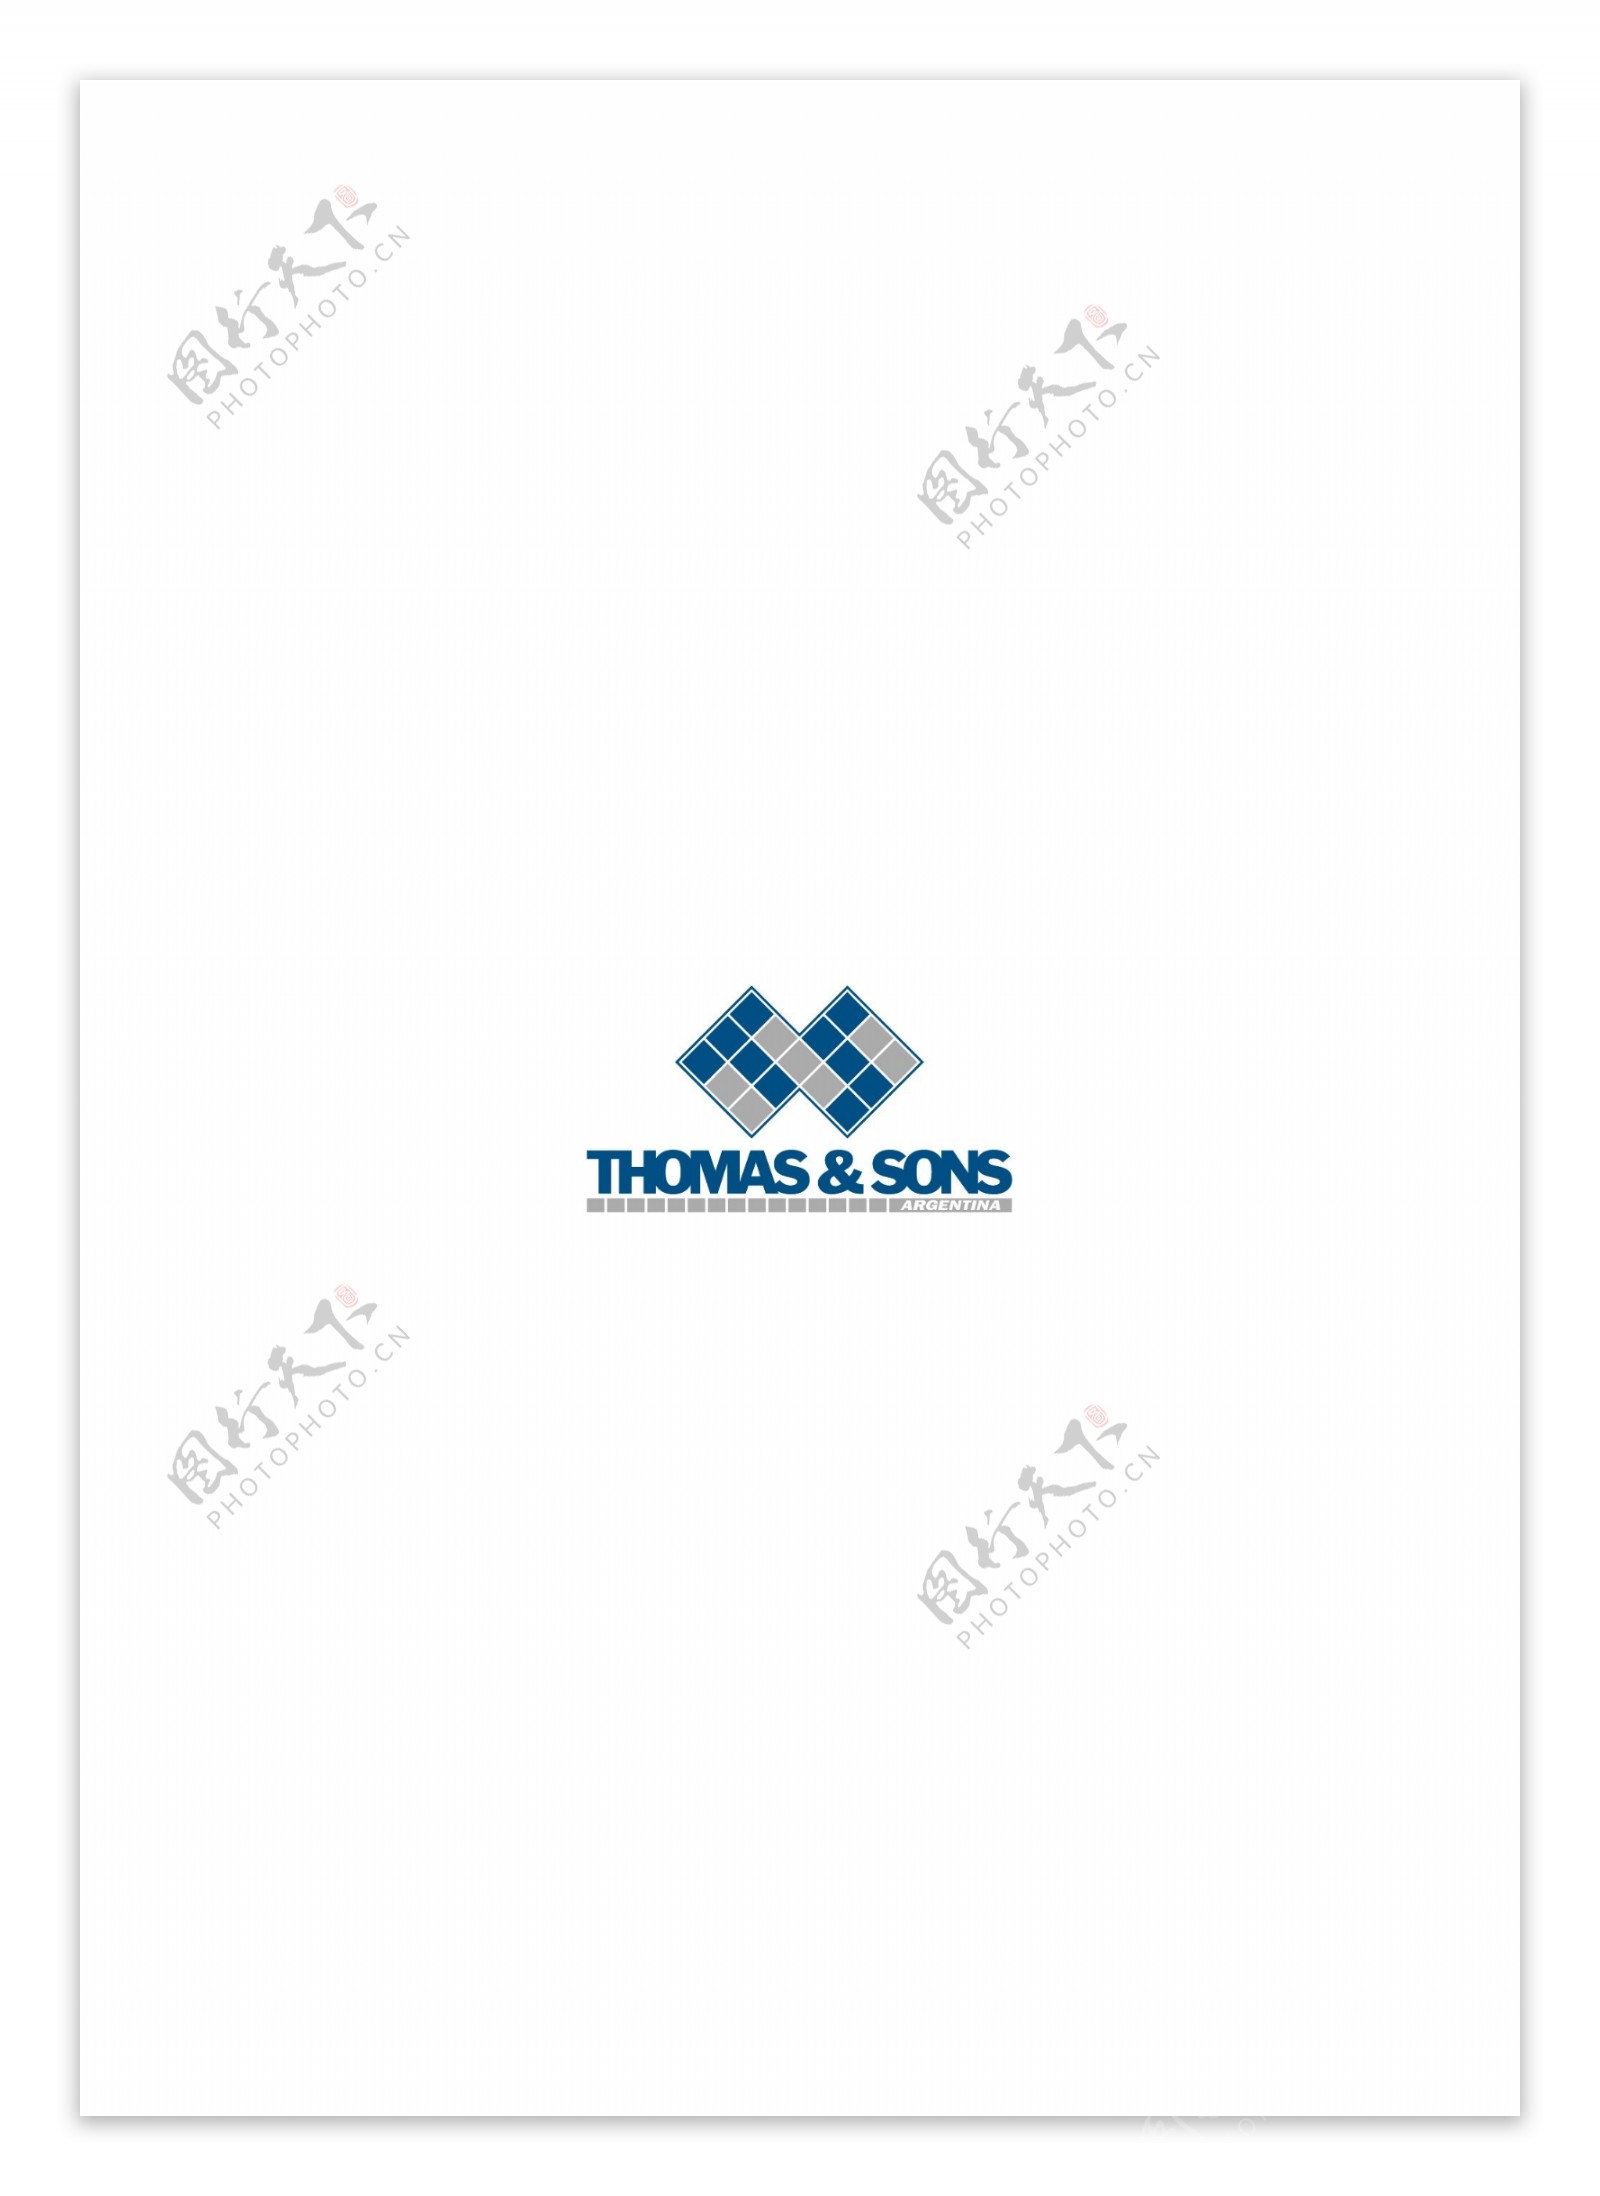 ThomasandSonslogo设计欣赏ThomasandSons服务公司LOGO下载标志设计欣赏